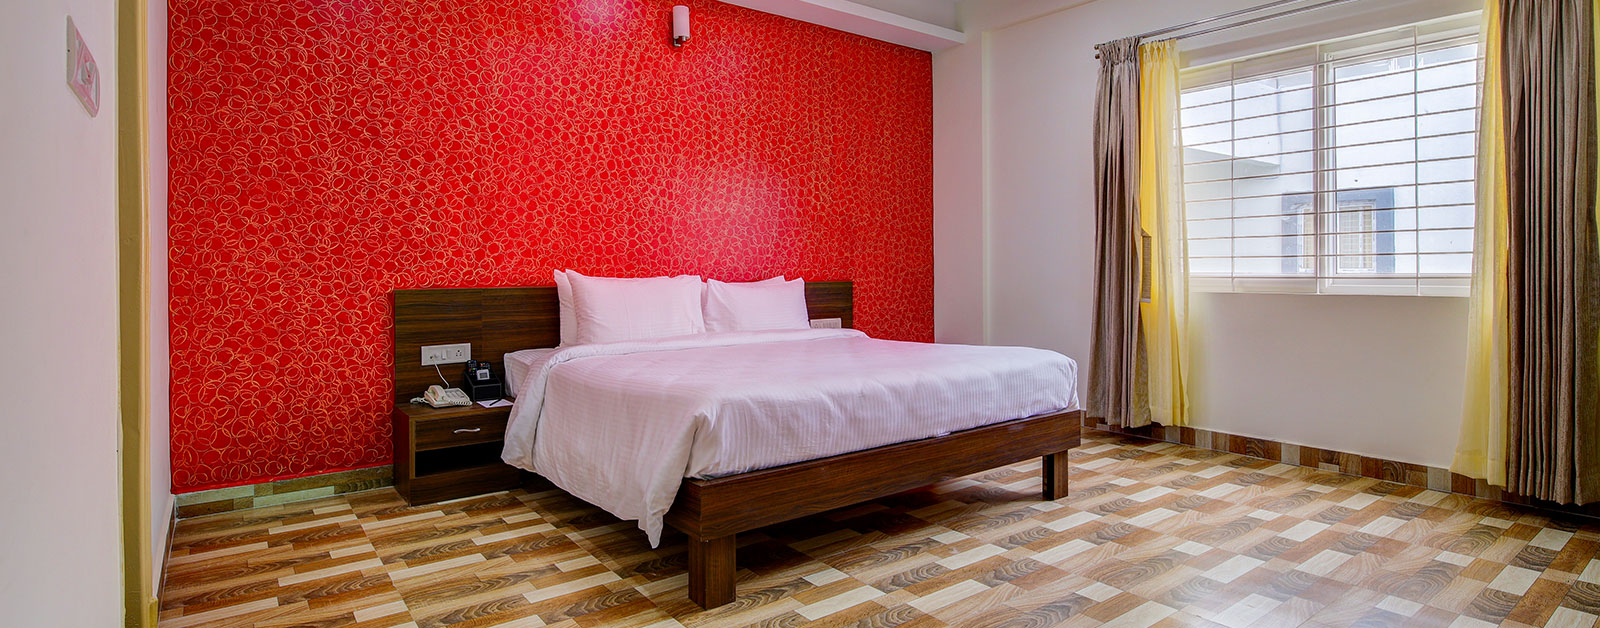 Hotel room near bangalore airport